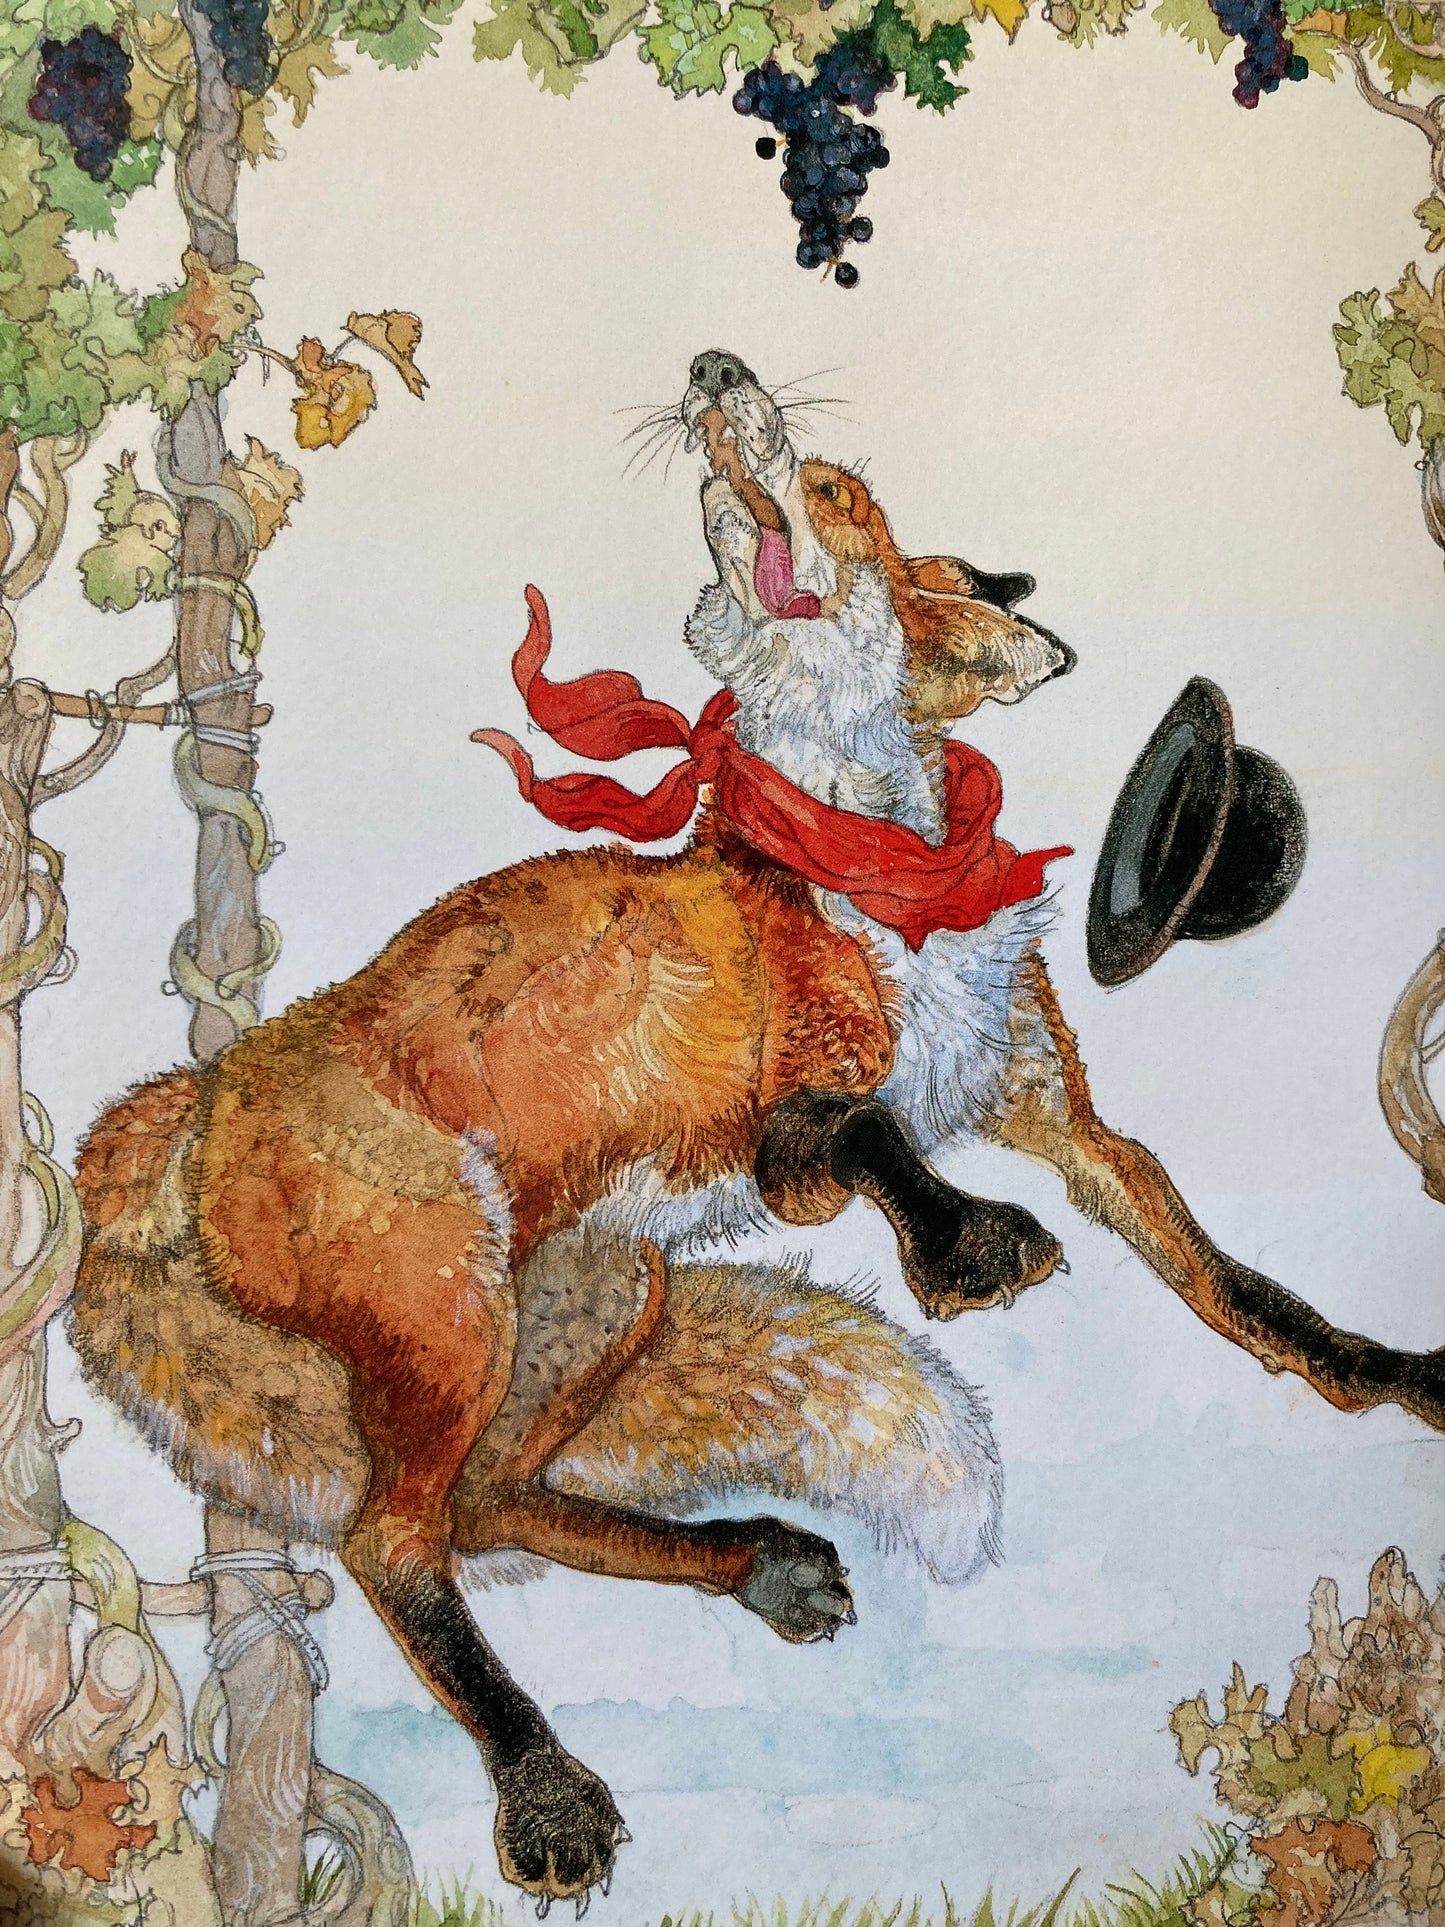 Children's Fables, Folk & Fairy Tales - AESOP'S FABLES